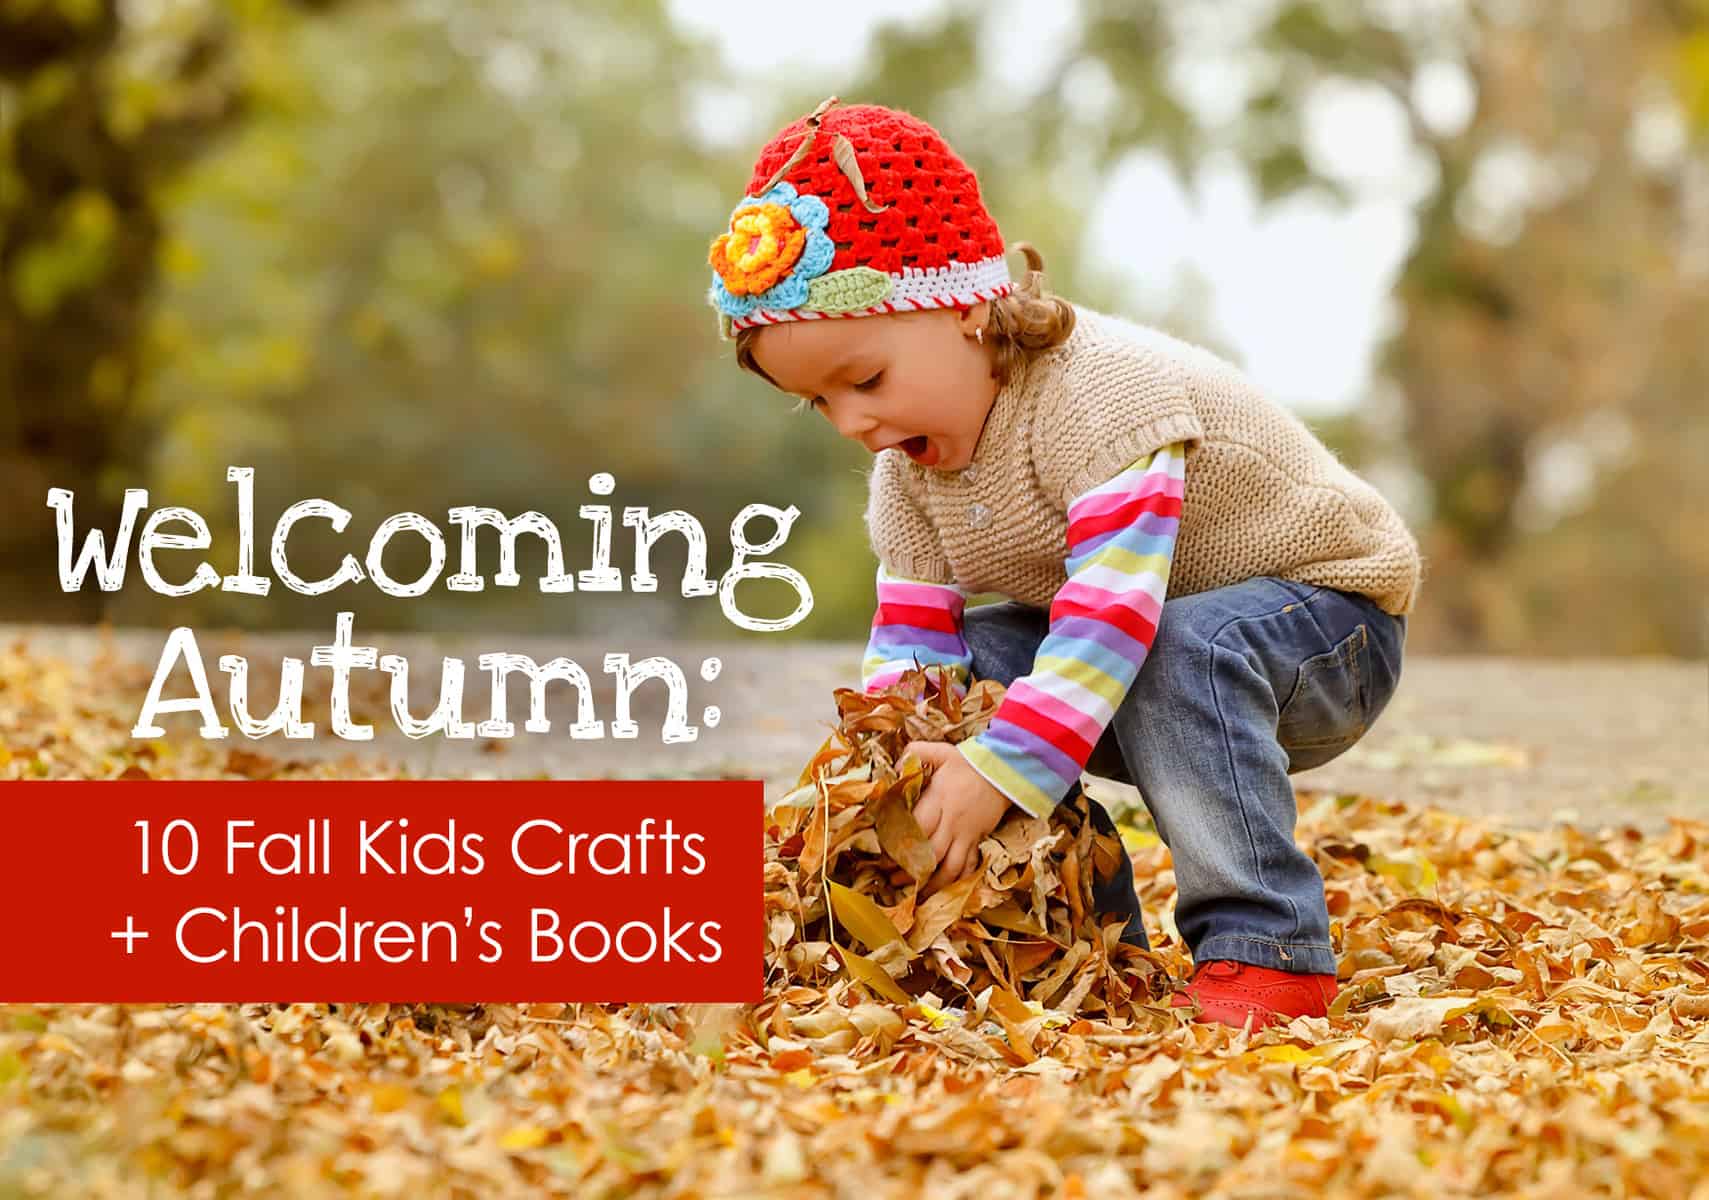 Autumn 10 Fall Kids Crafts + Children's Books